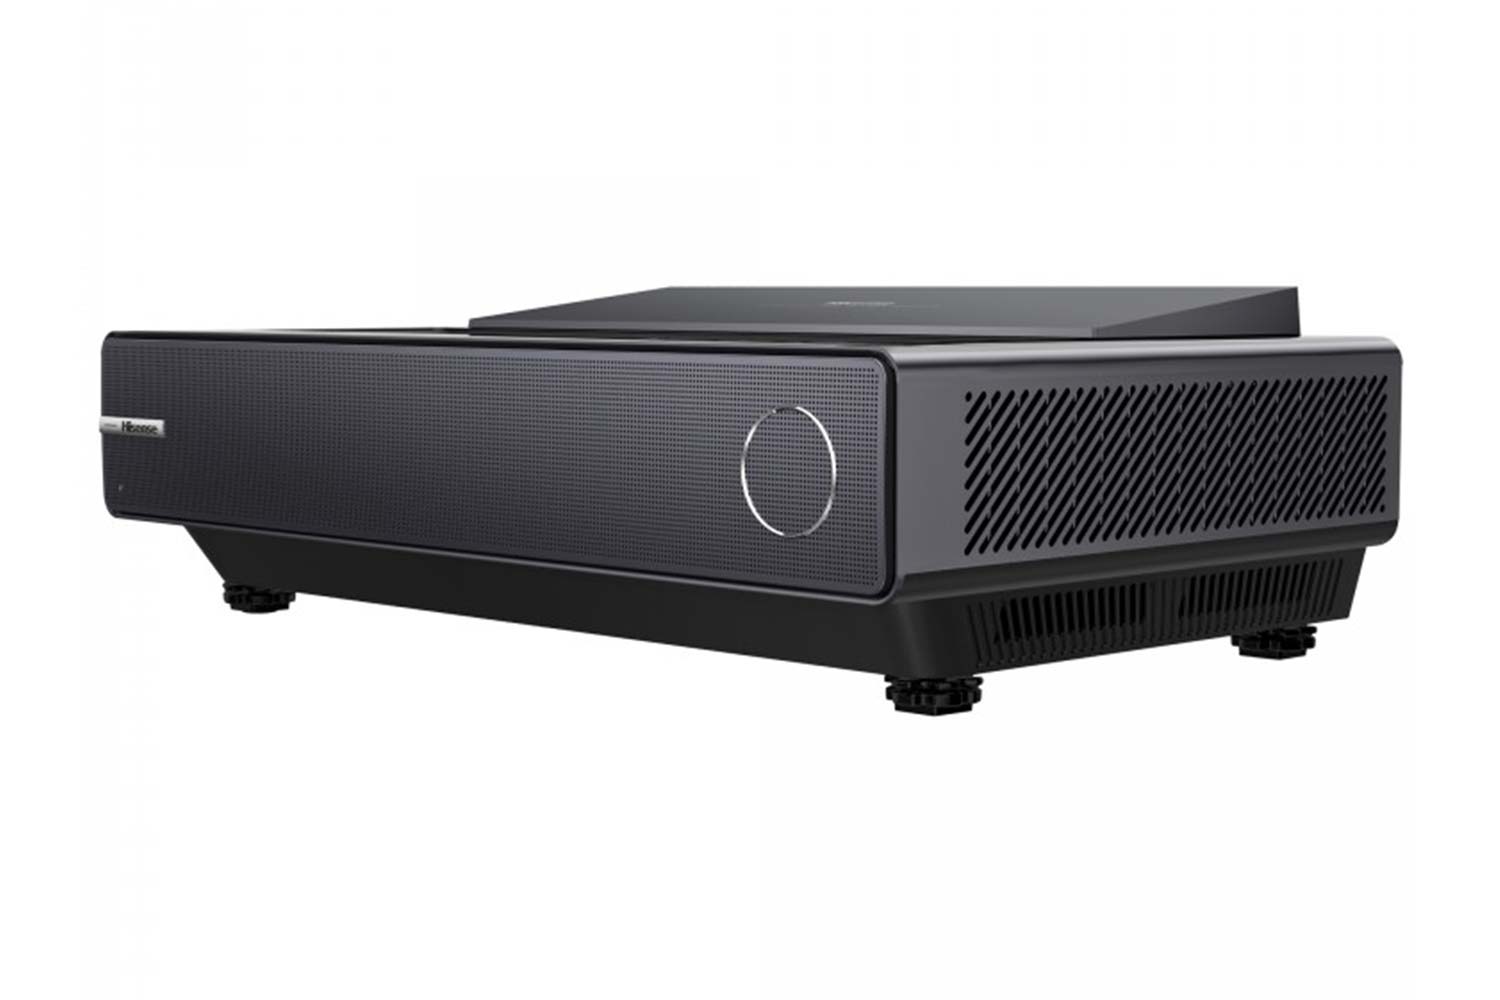 Hisense PX1-Pro TriChroma 4K Ultra HD Laser TV - HEIMKINORAUM Edition